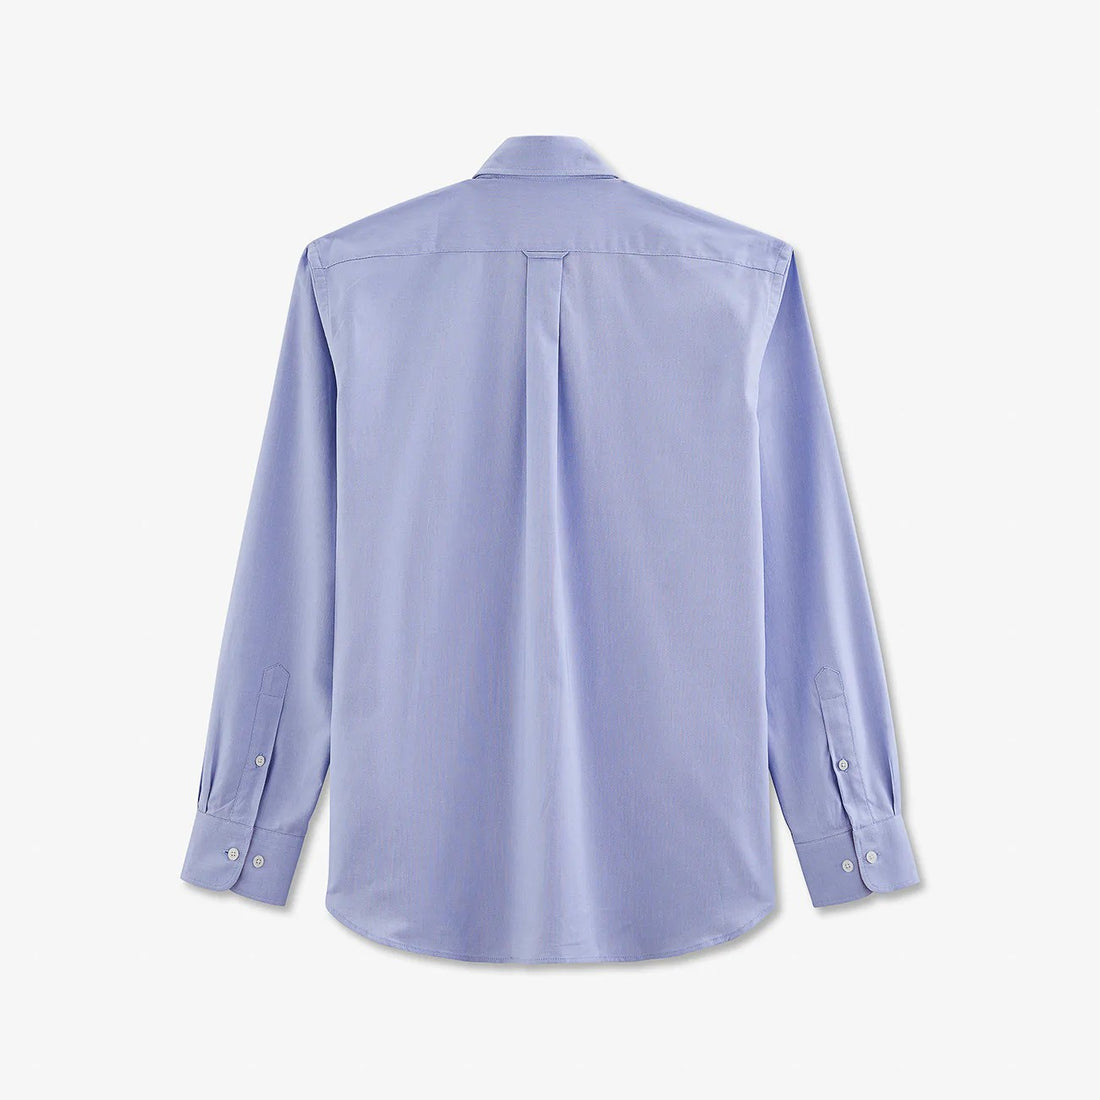 Plain Light Blue Cotton Shirt